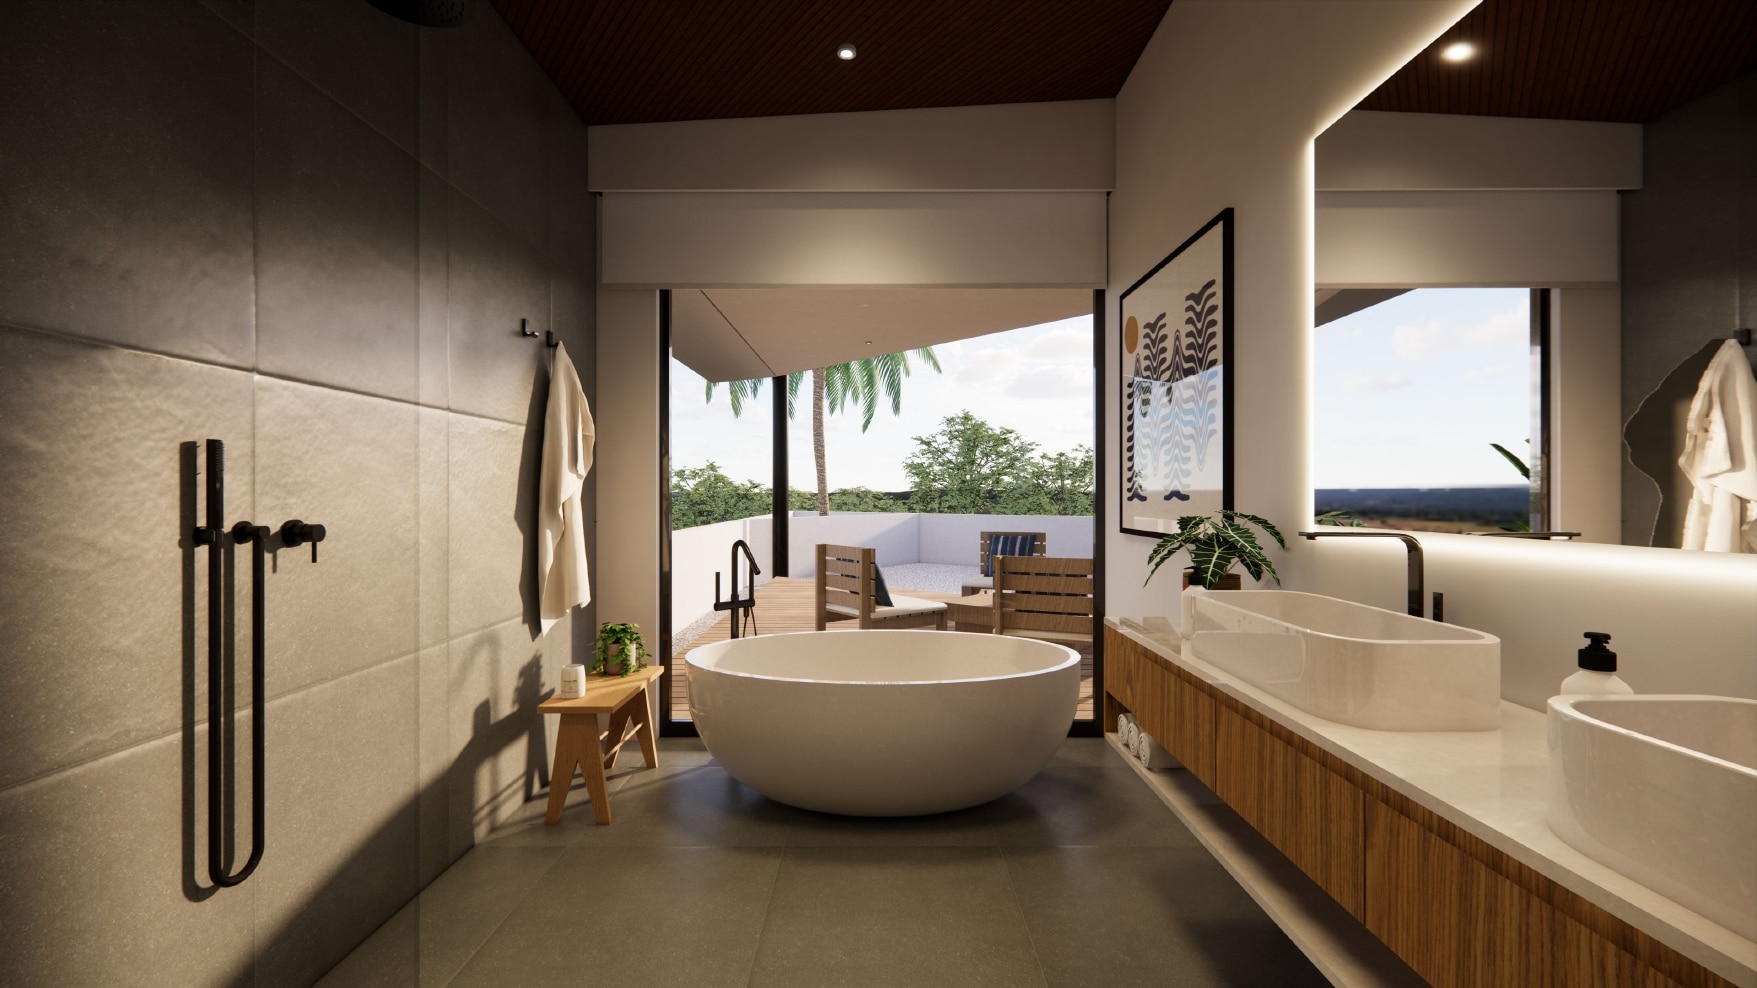 Design Assembly - Anyar 5 Villa - Bali Architect - Interior Design - Bali Villa - Bathroom - Bathtub - Wooden Facade